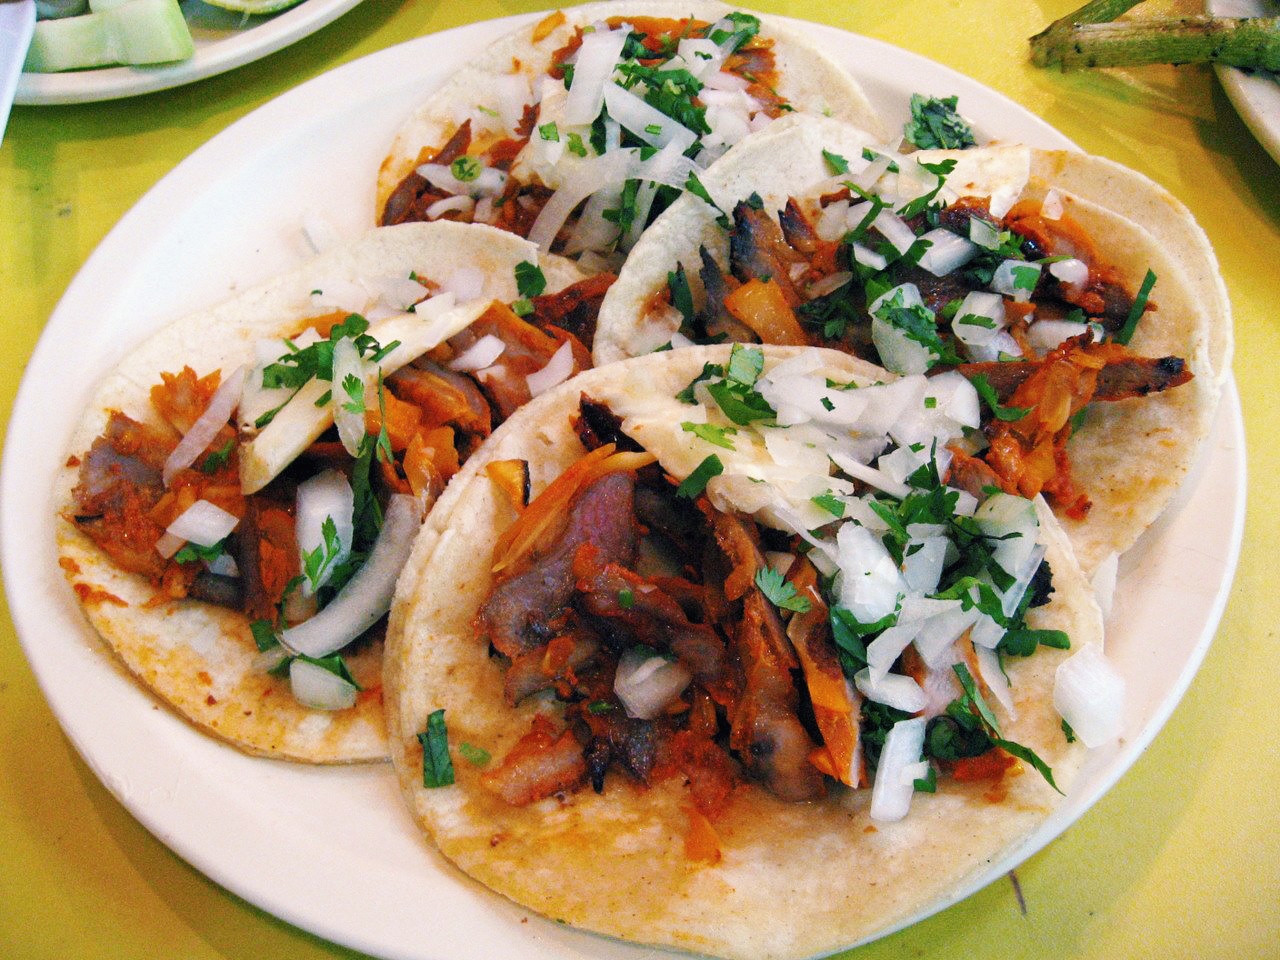 Four tacos al pastor with onions and cilantro at El Fogon tacqueria in Playa del Carmen